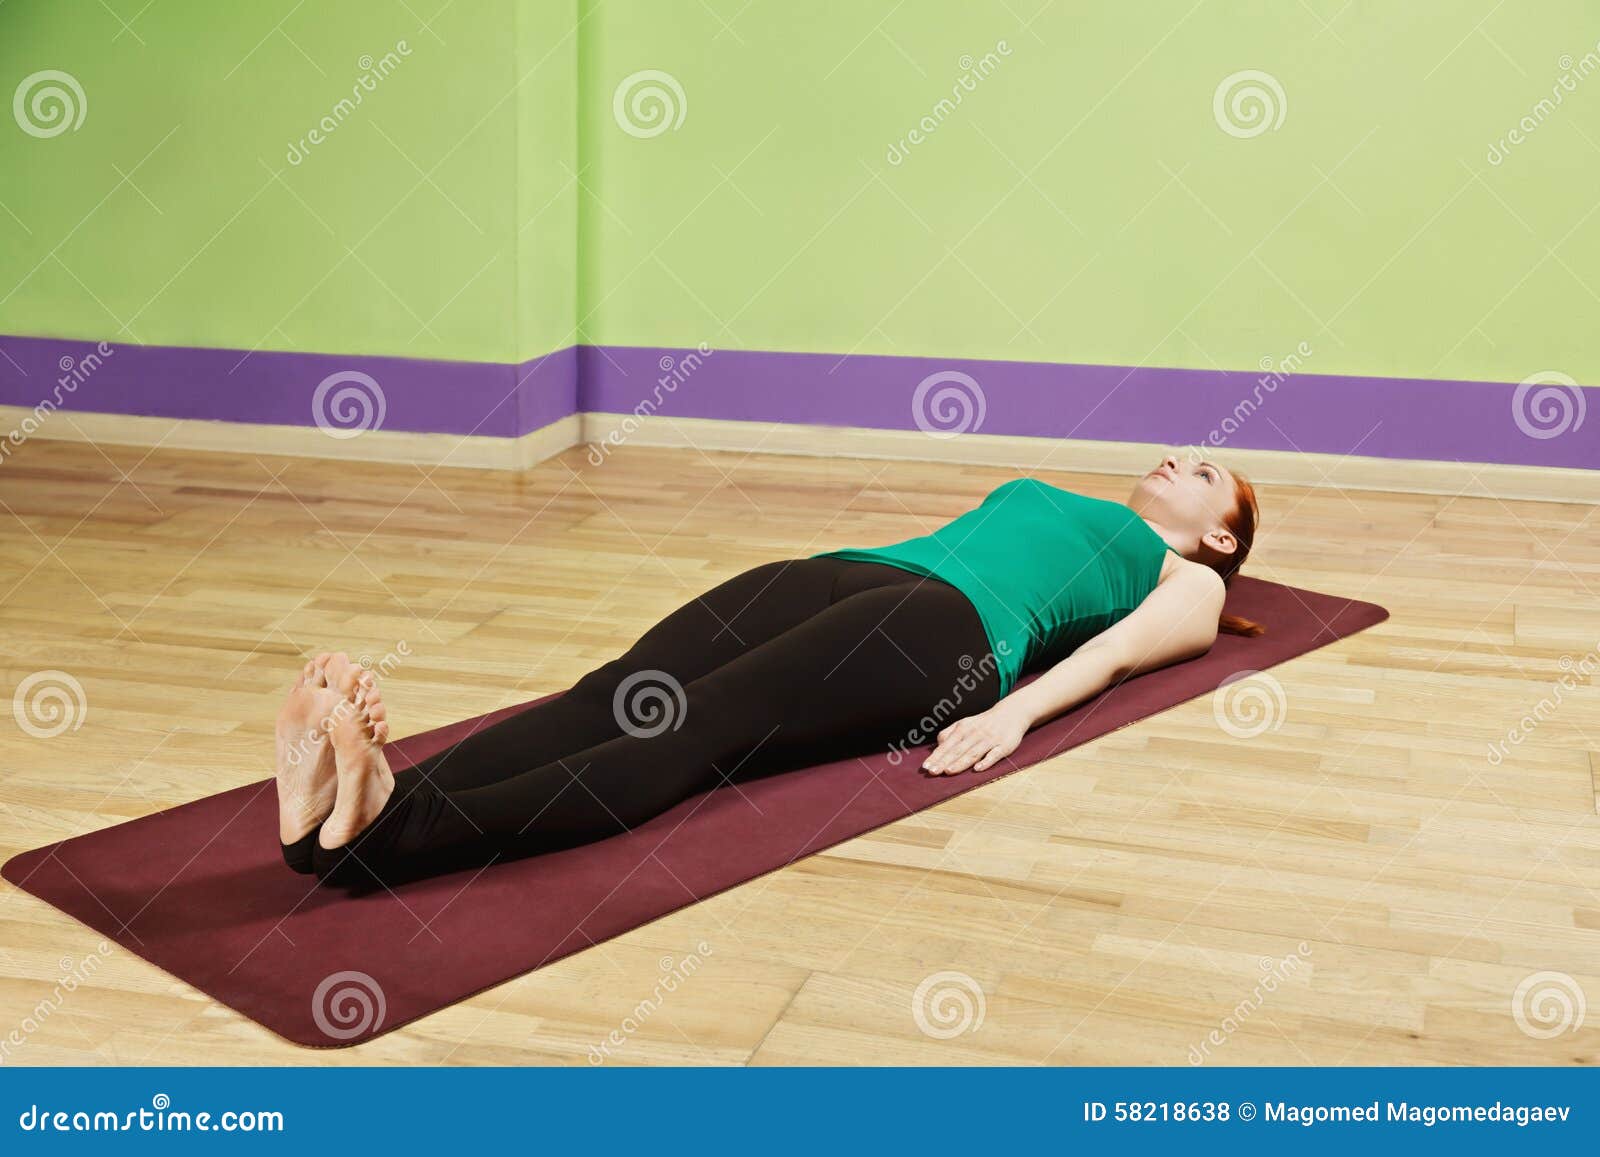 710 Laying Yoga Mat Stock Photos - Free & Royalty-Free Stock